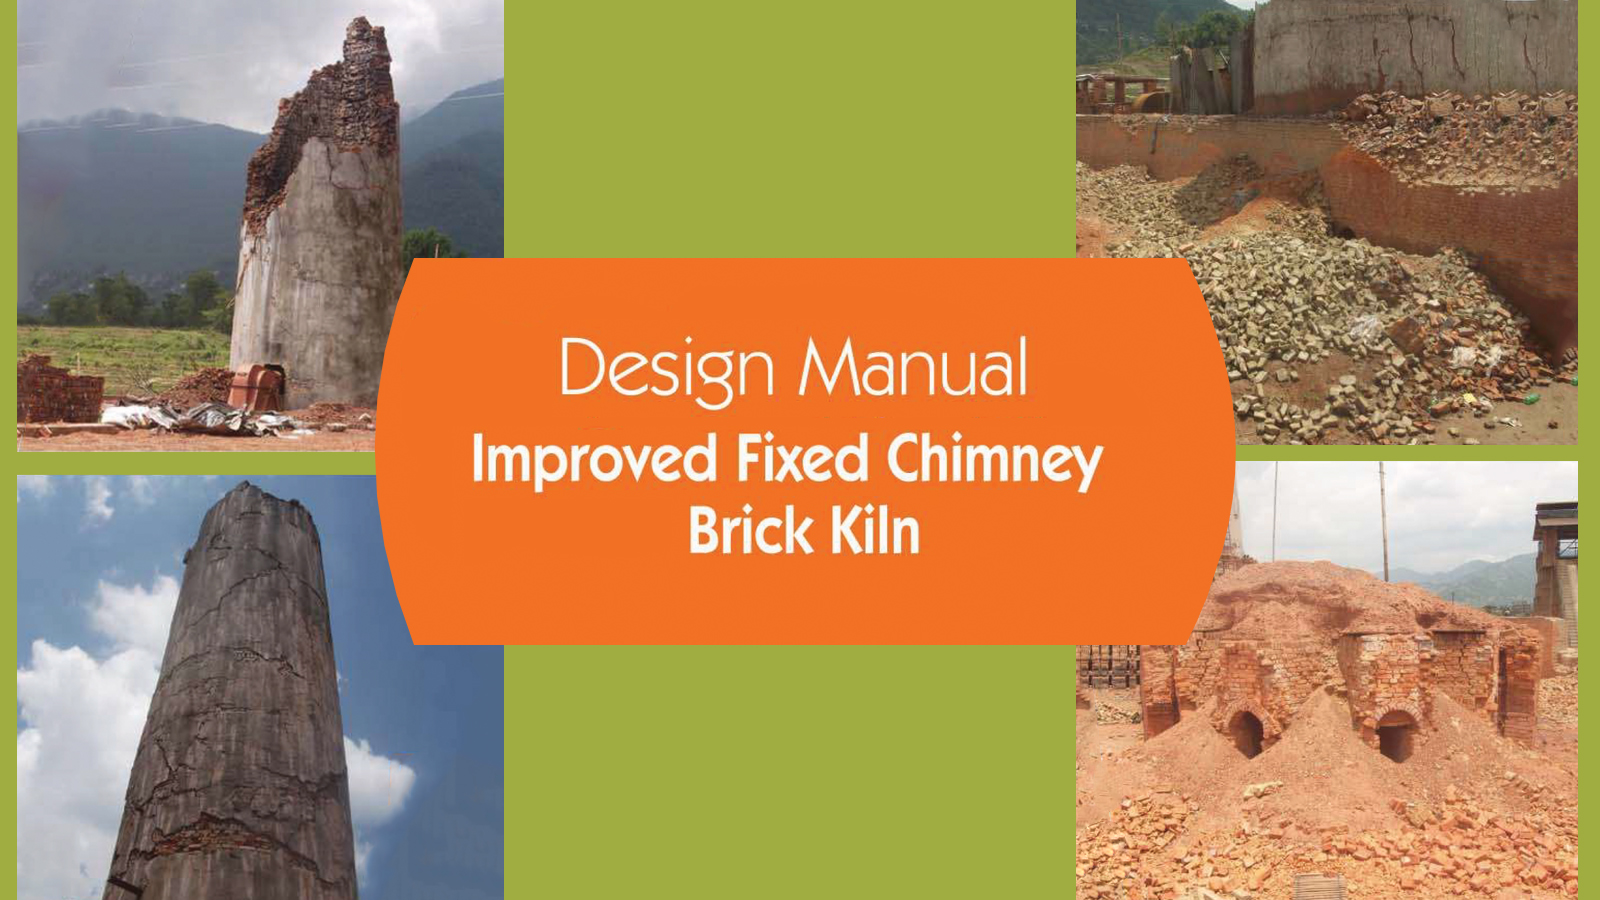 Design Manual for Improved Fixed Chimney Brick Kiln in Nepal